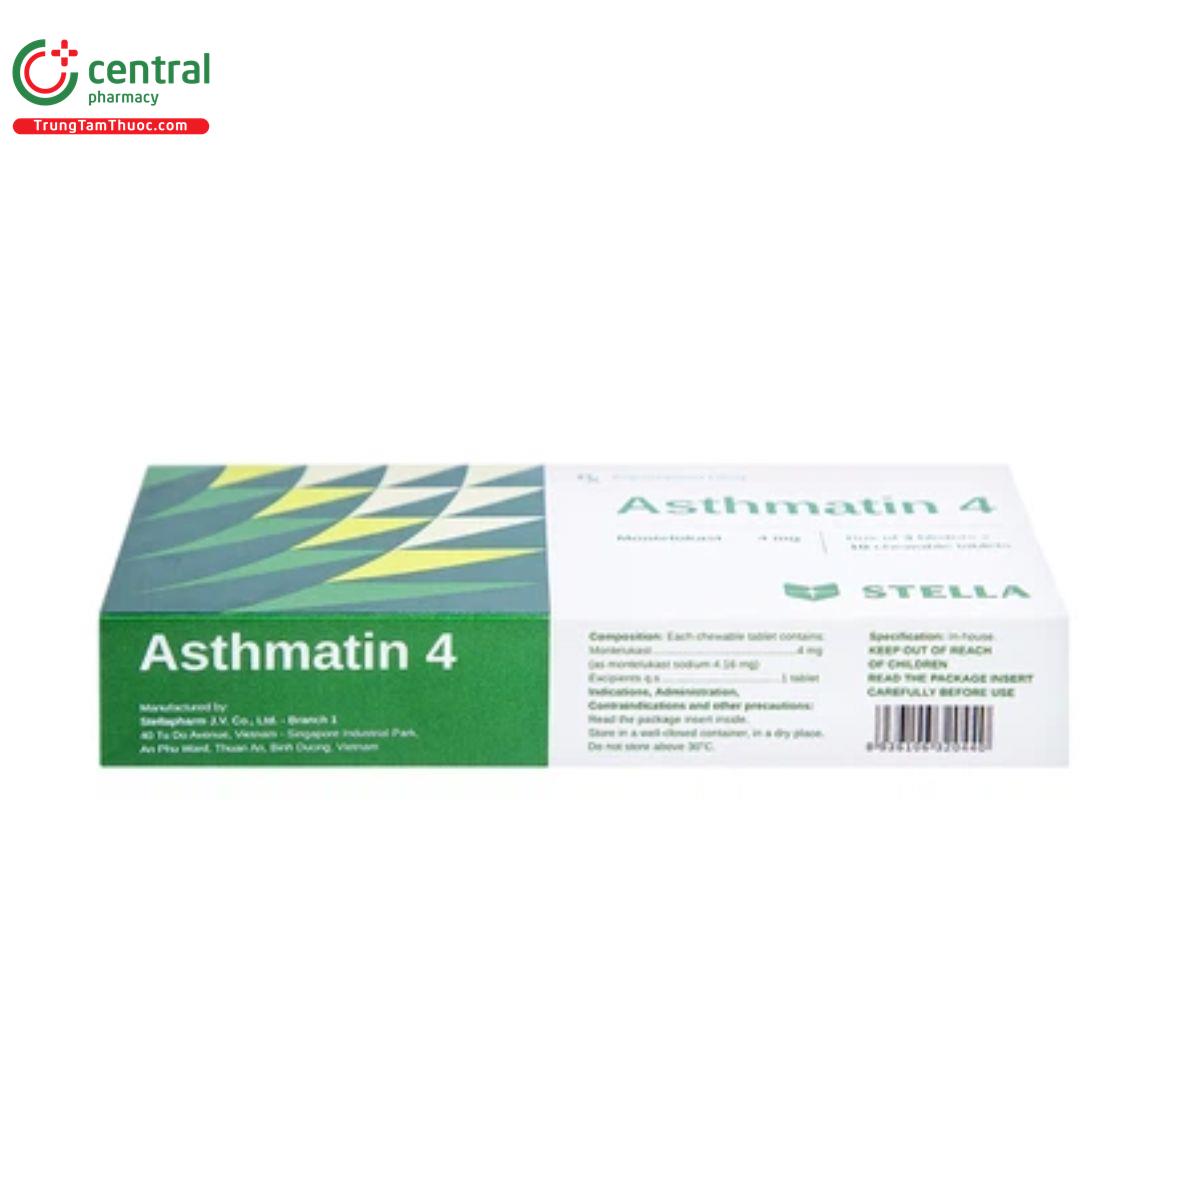 thuoc asthmatin 4 4 D1804